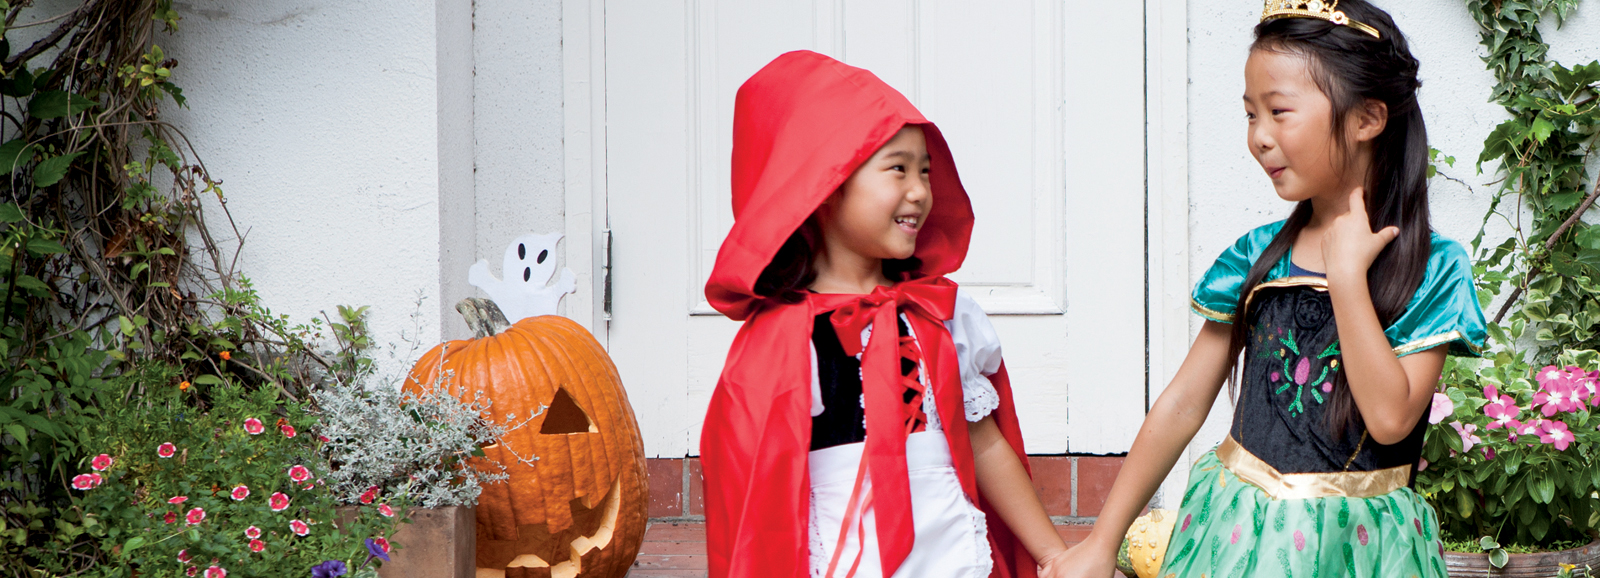 young-girls-in-halloween-costumes-1600x578-ALT.jpg